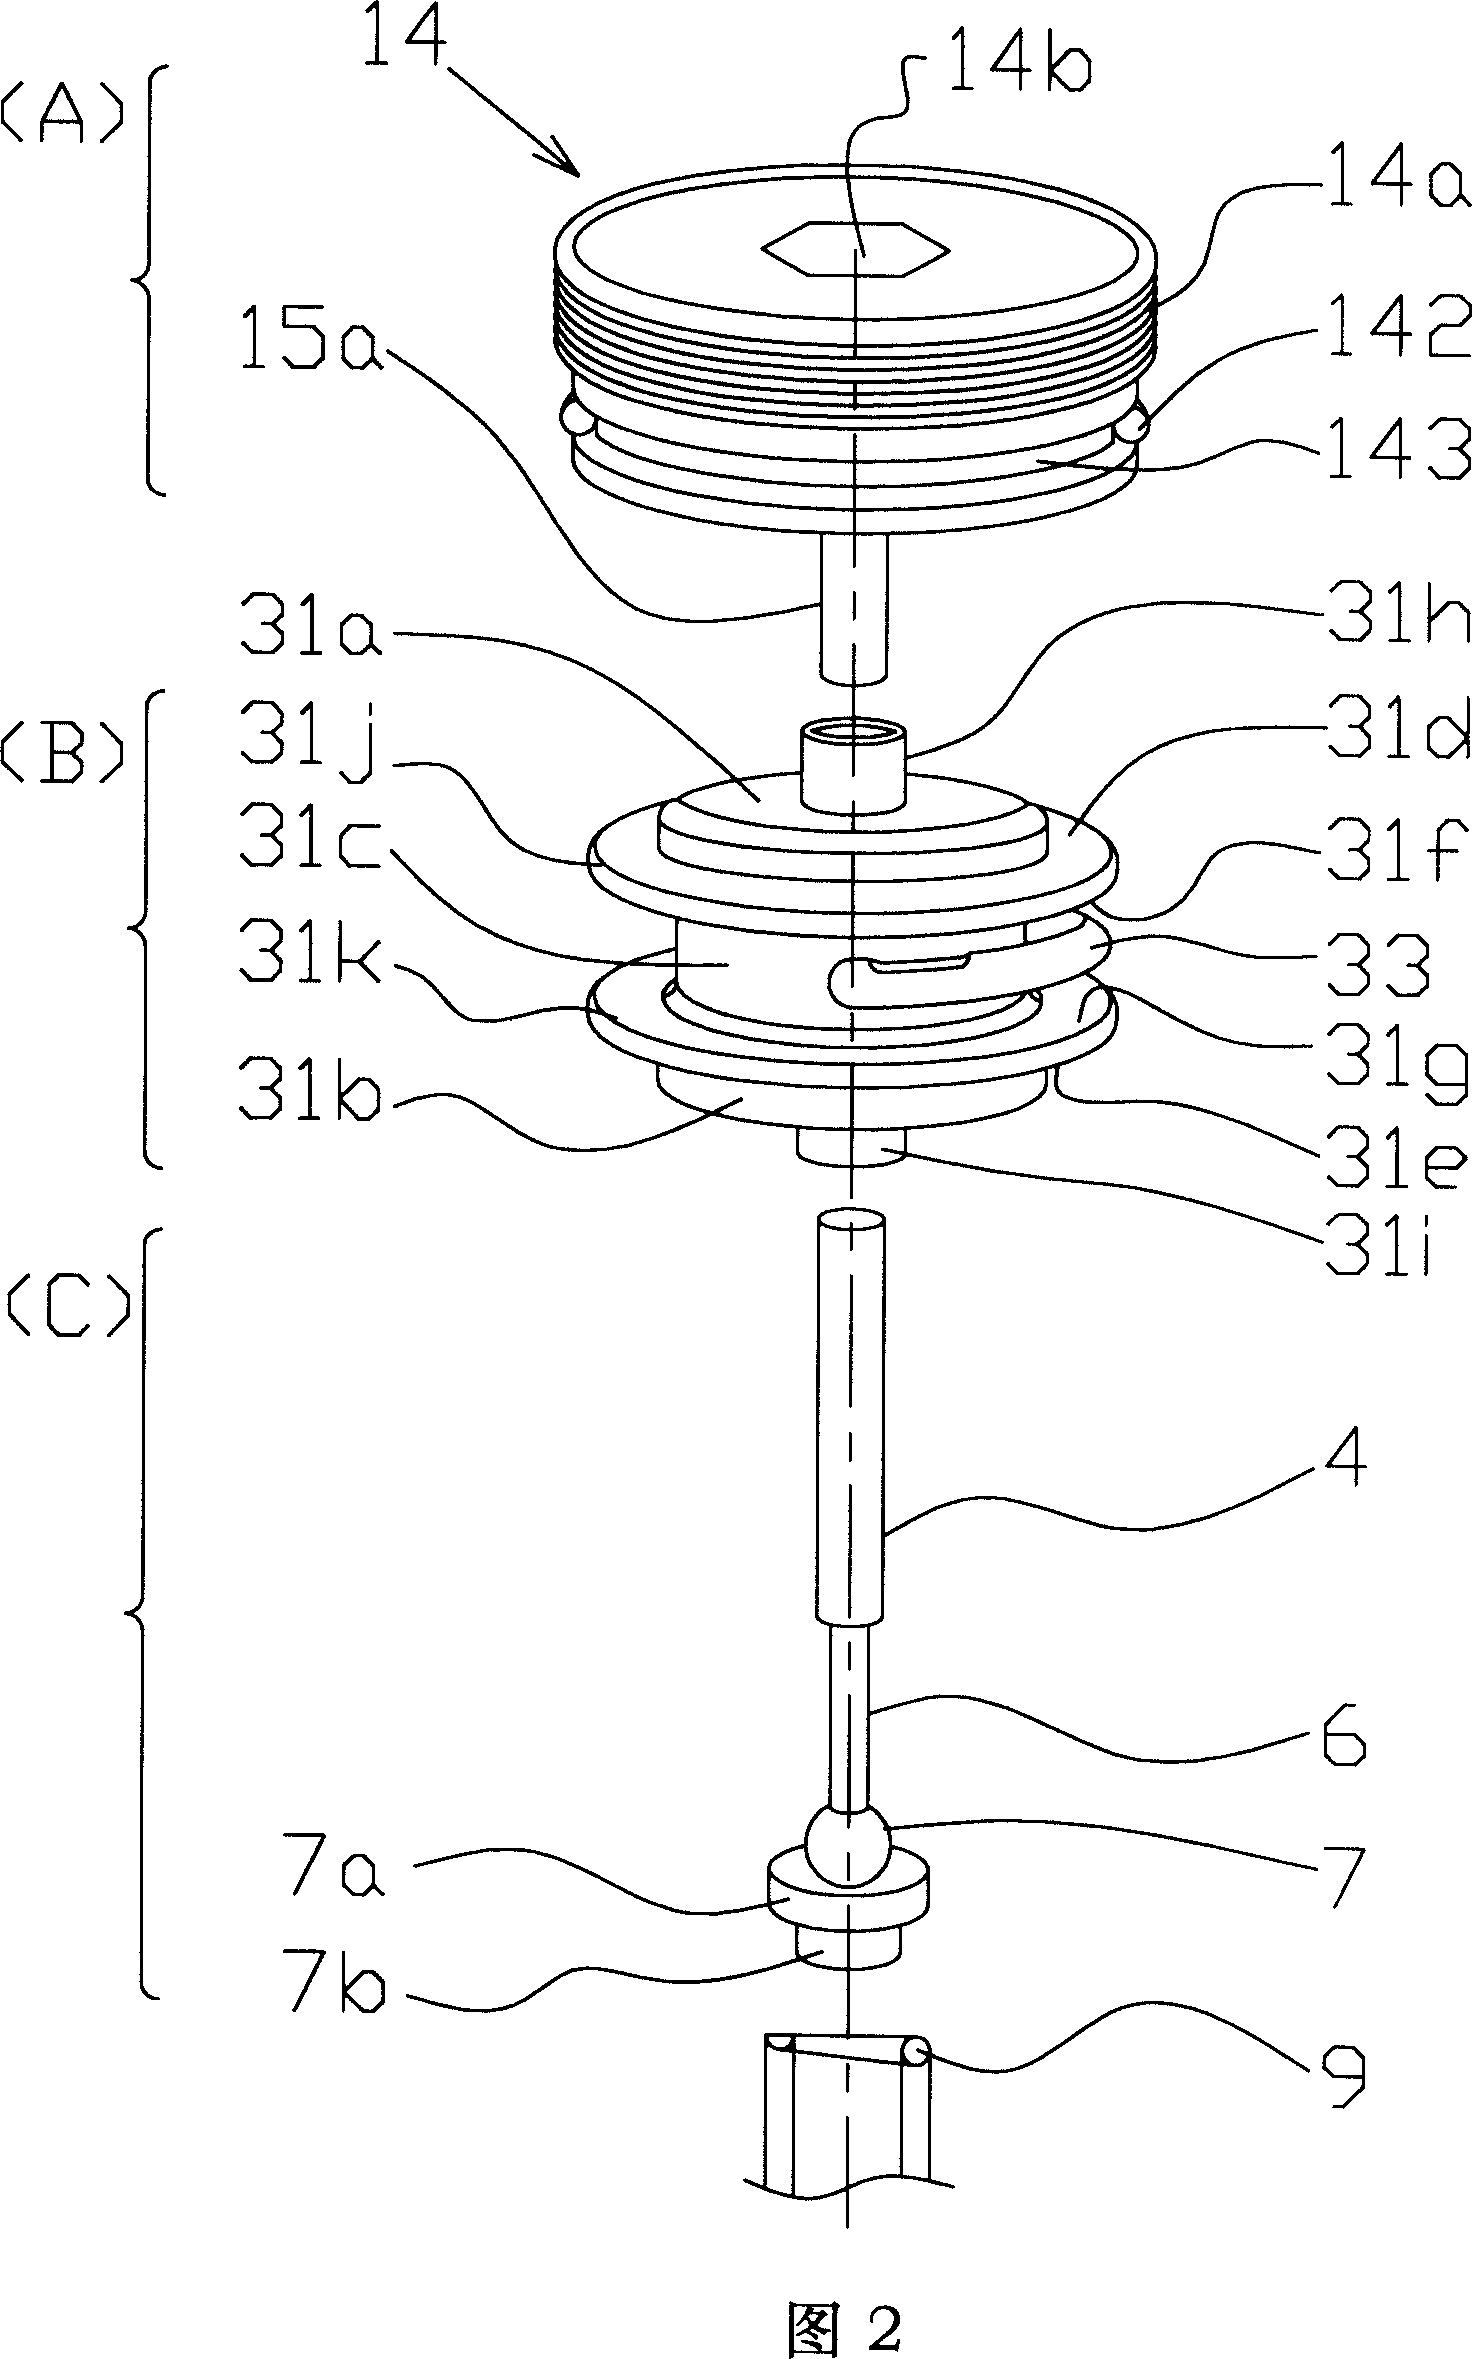 Thermodynamic expansion valve